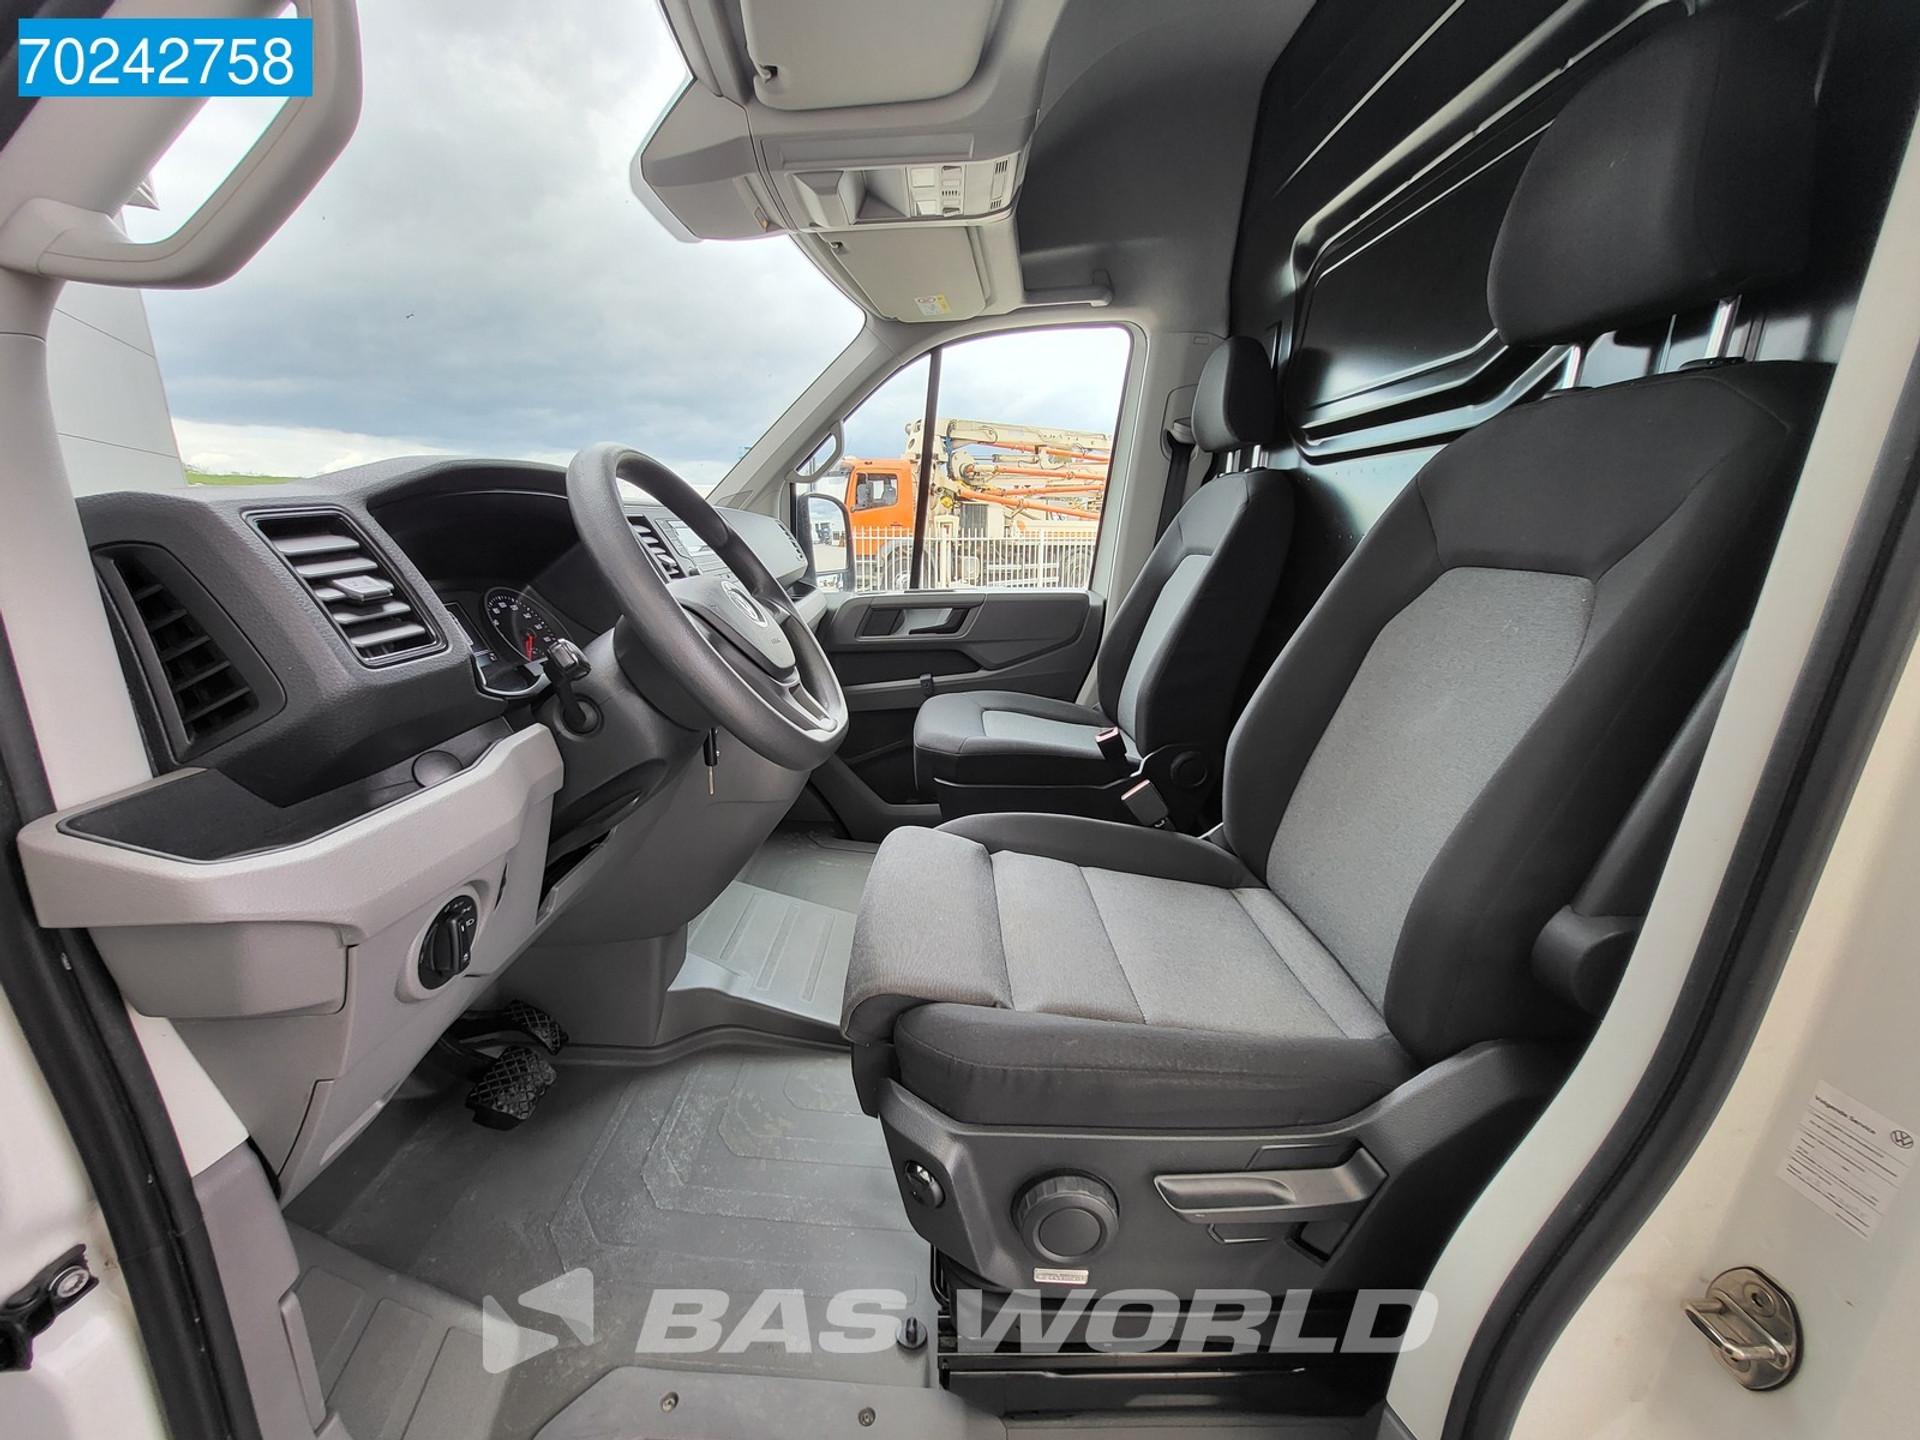 Foto 12 van Volkswagen Crafter 140pk Automaat L3H3 Airco Cruise Parkeersensoren Airco Cruise control